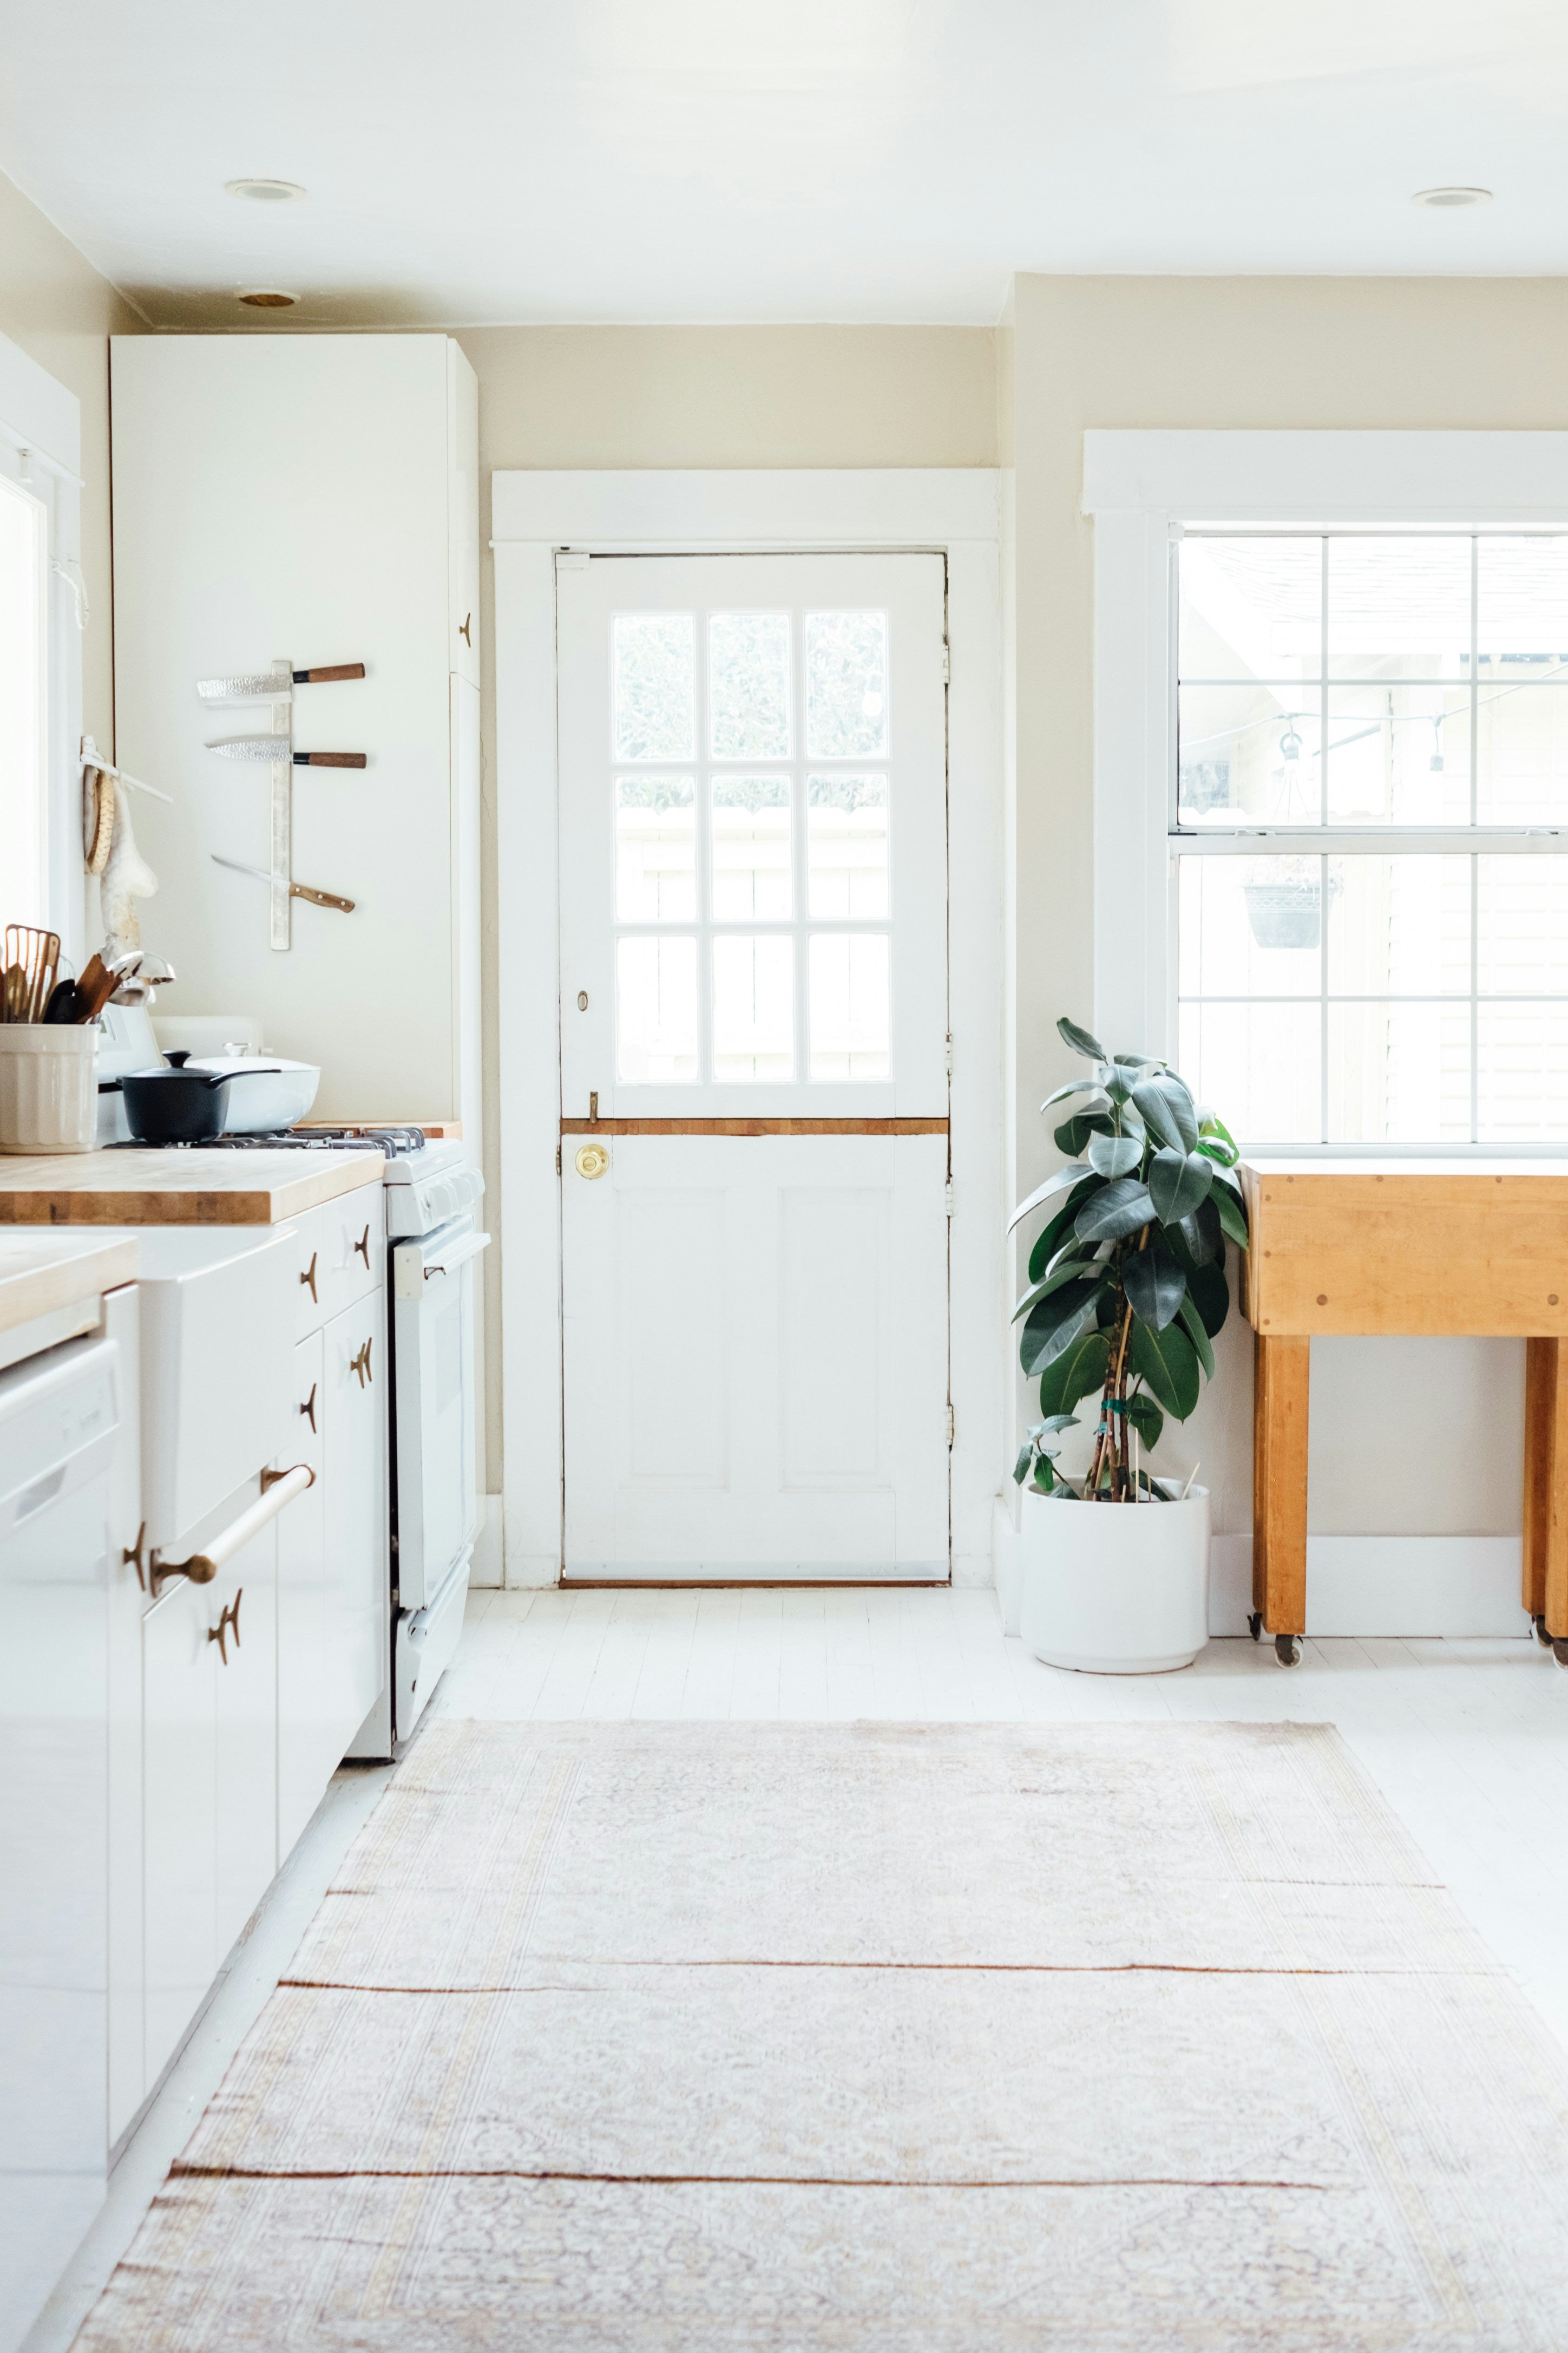 Retro Revival Upgrade Your Kitchen With A Stylish Retro Style Refrigerator | Fridge.com